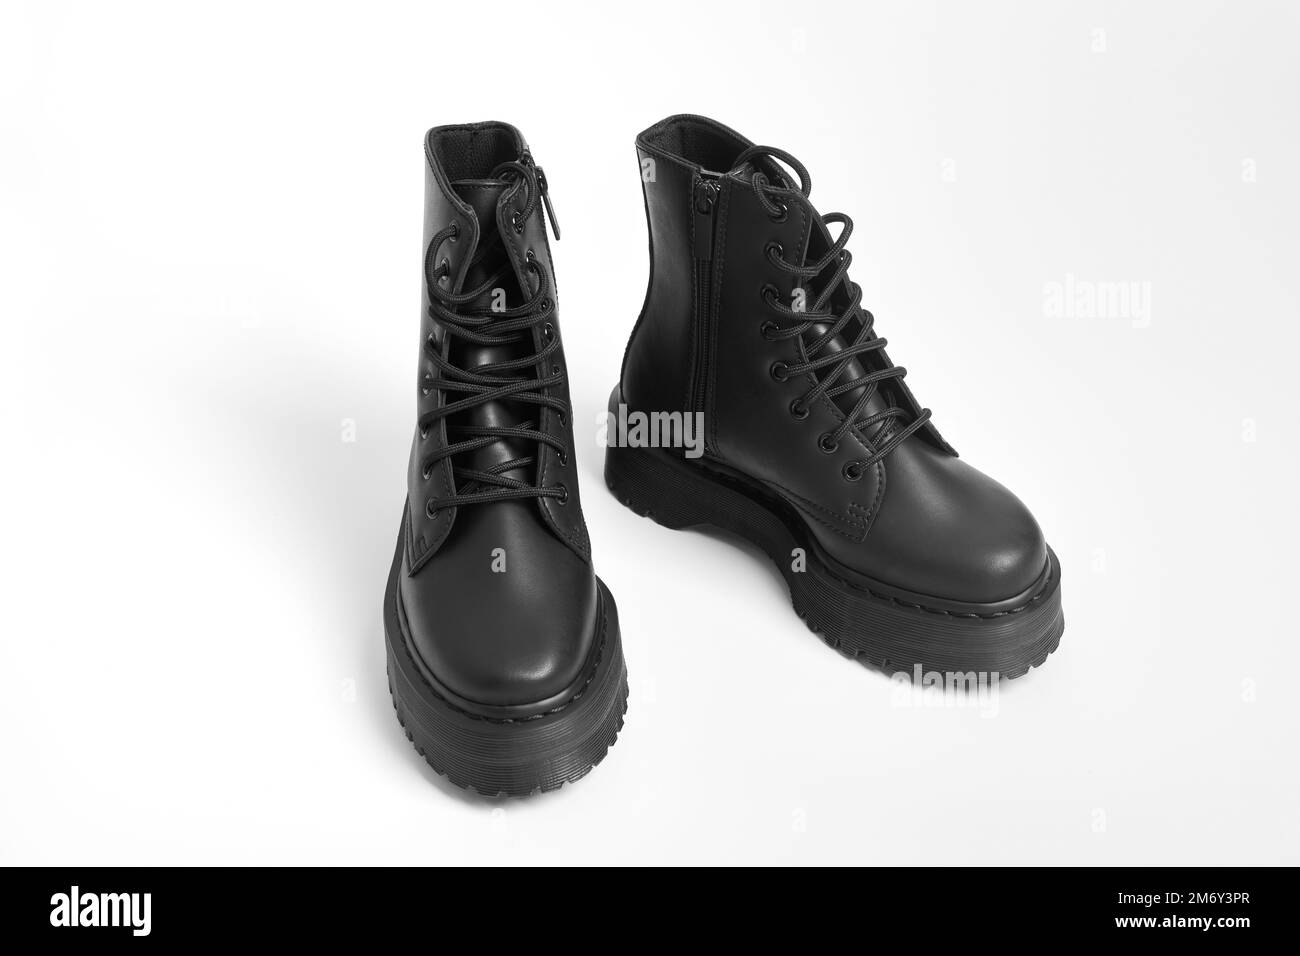 Platform shoes fashion Black and White Stock Photos & Images - Alamy